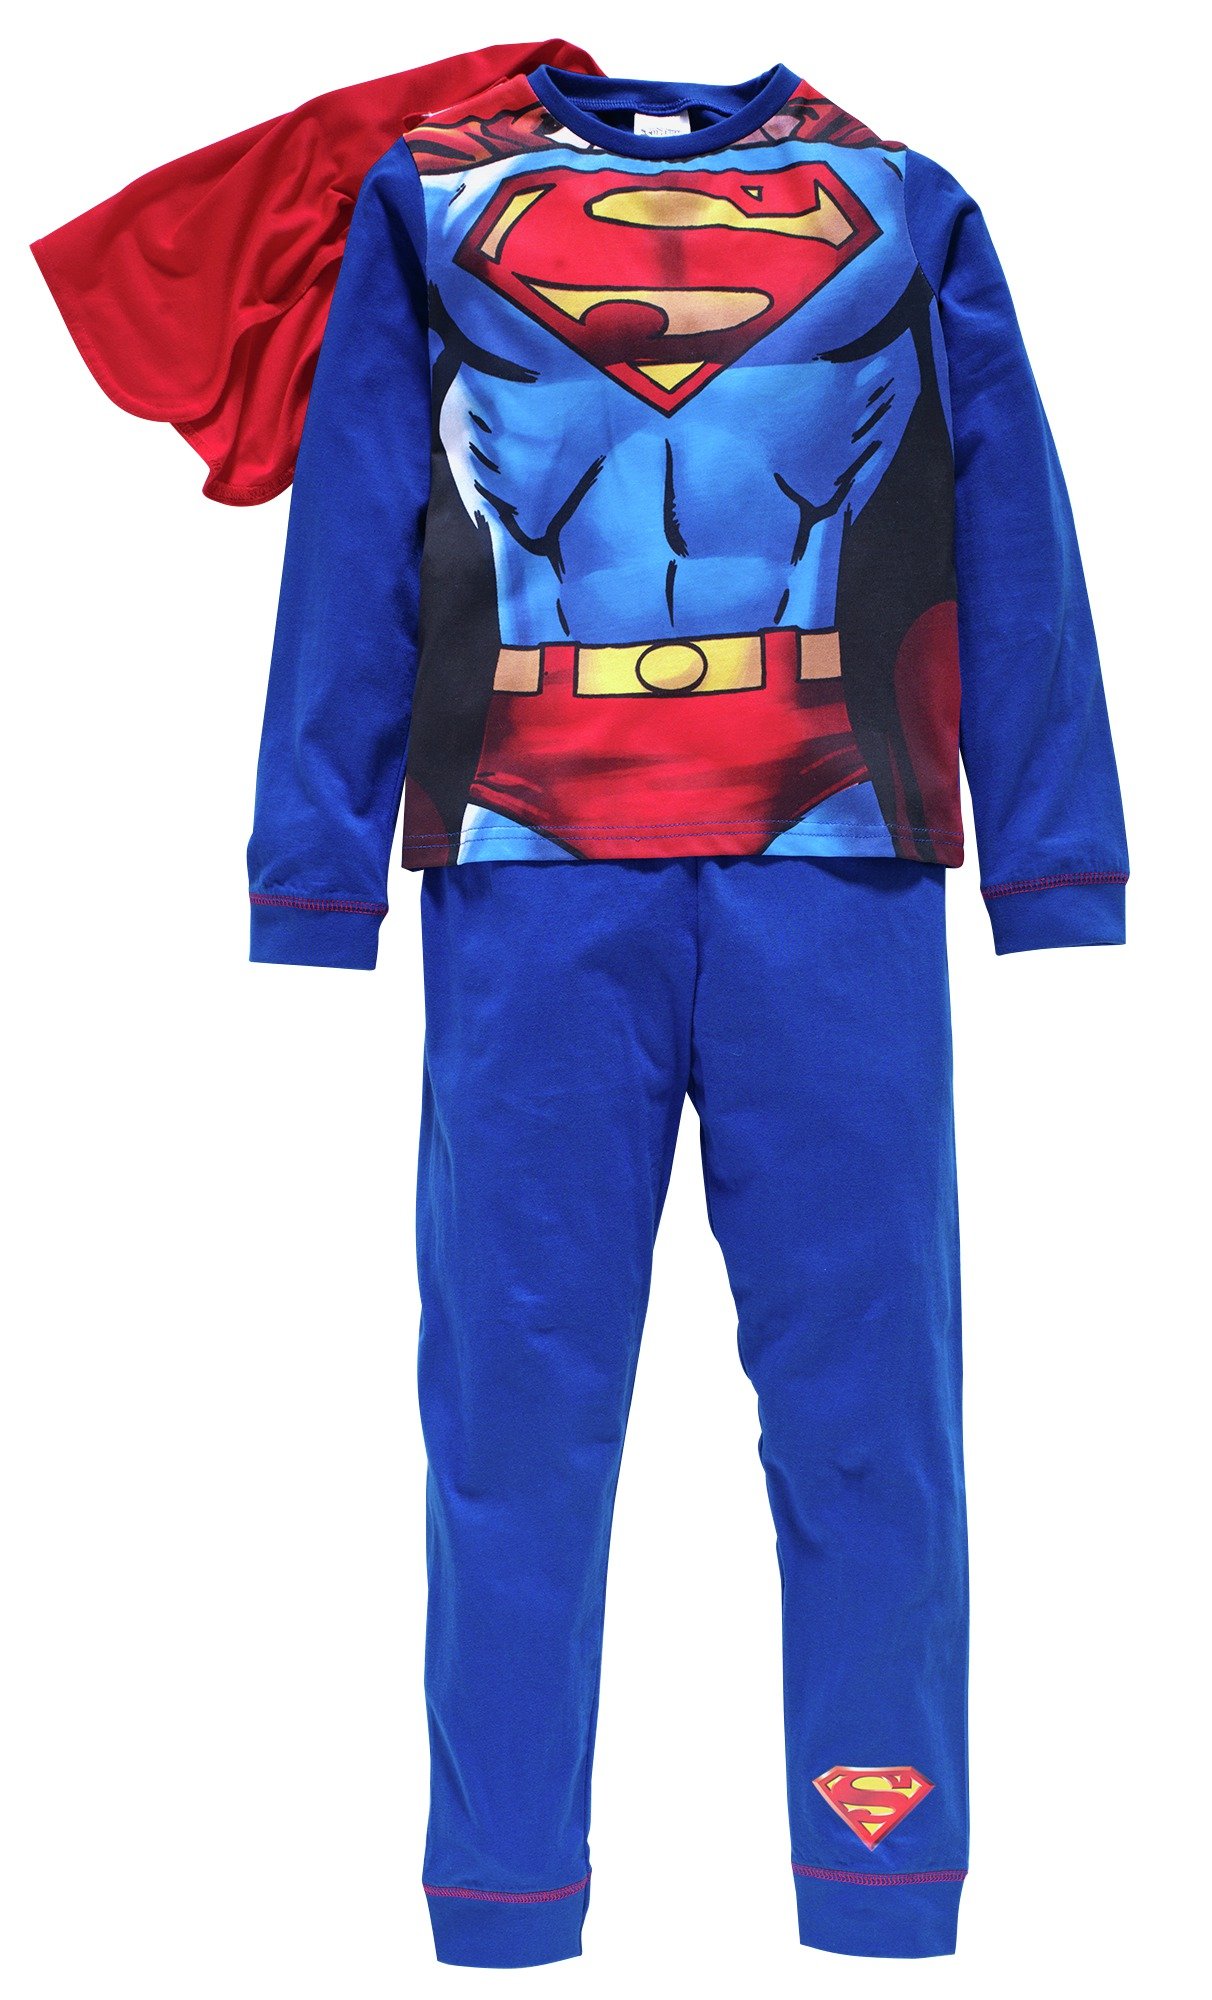 Superman Novelty Pyjamas with Cape - 3-4 Years